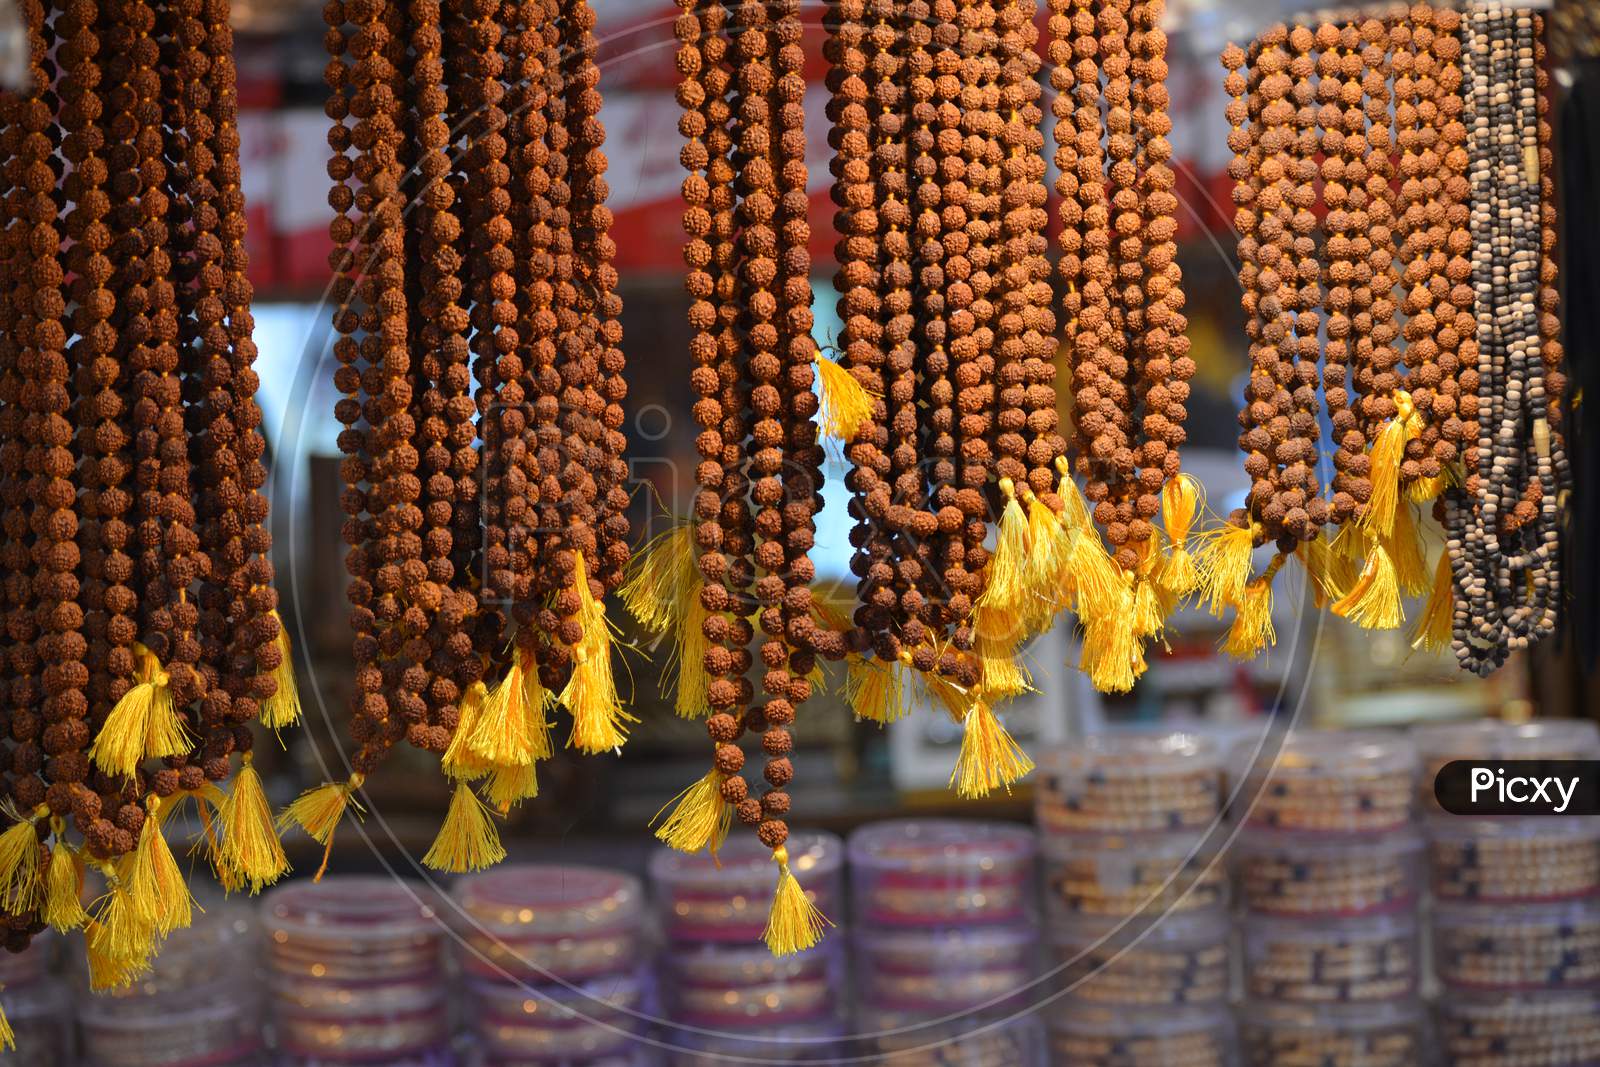 Rudraksha Garlands for sale at a shop in maihar, madhya pradesh, India